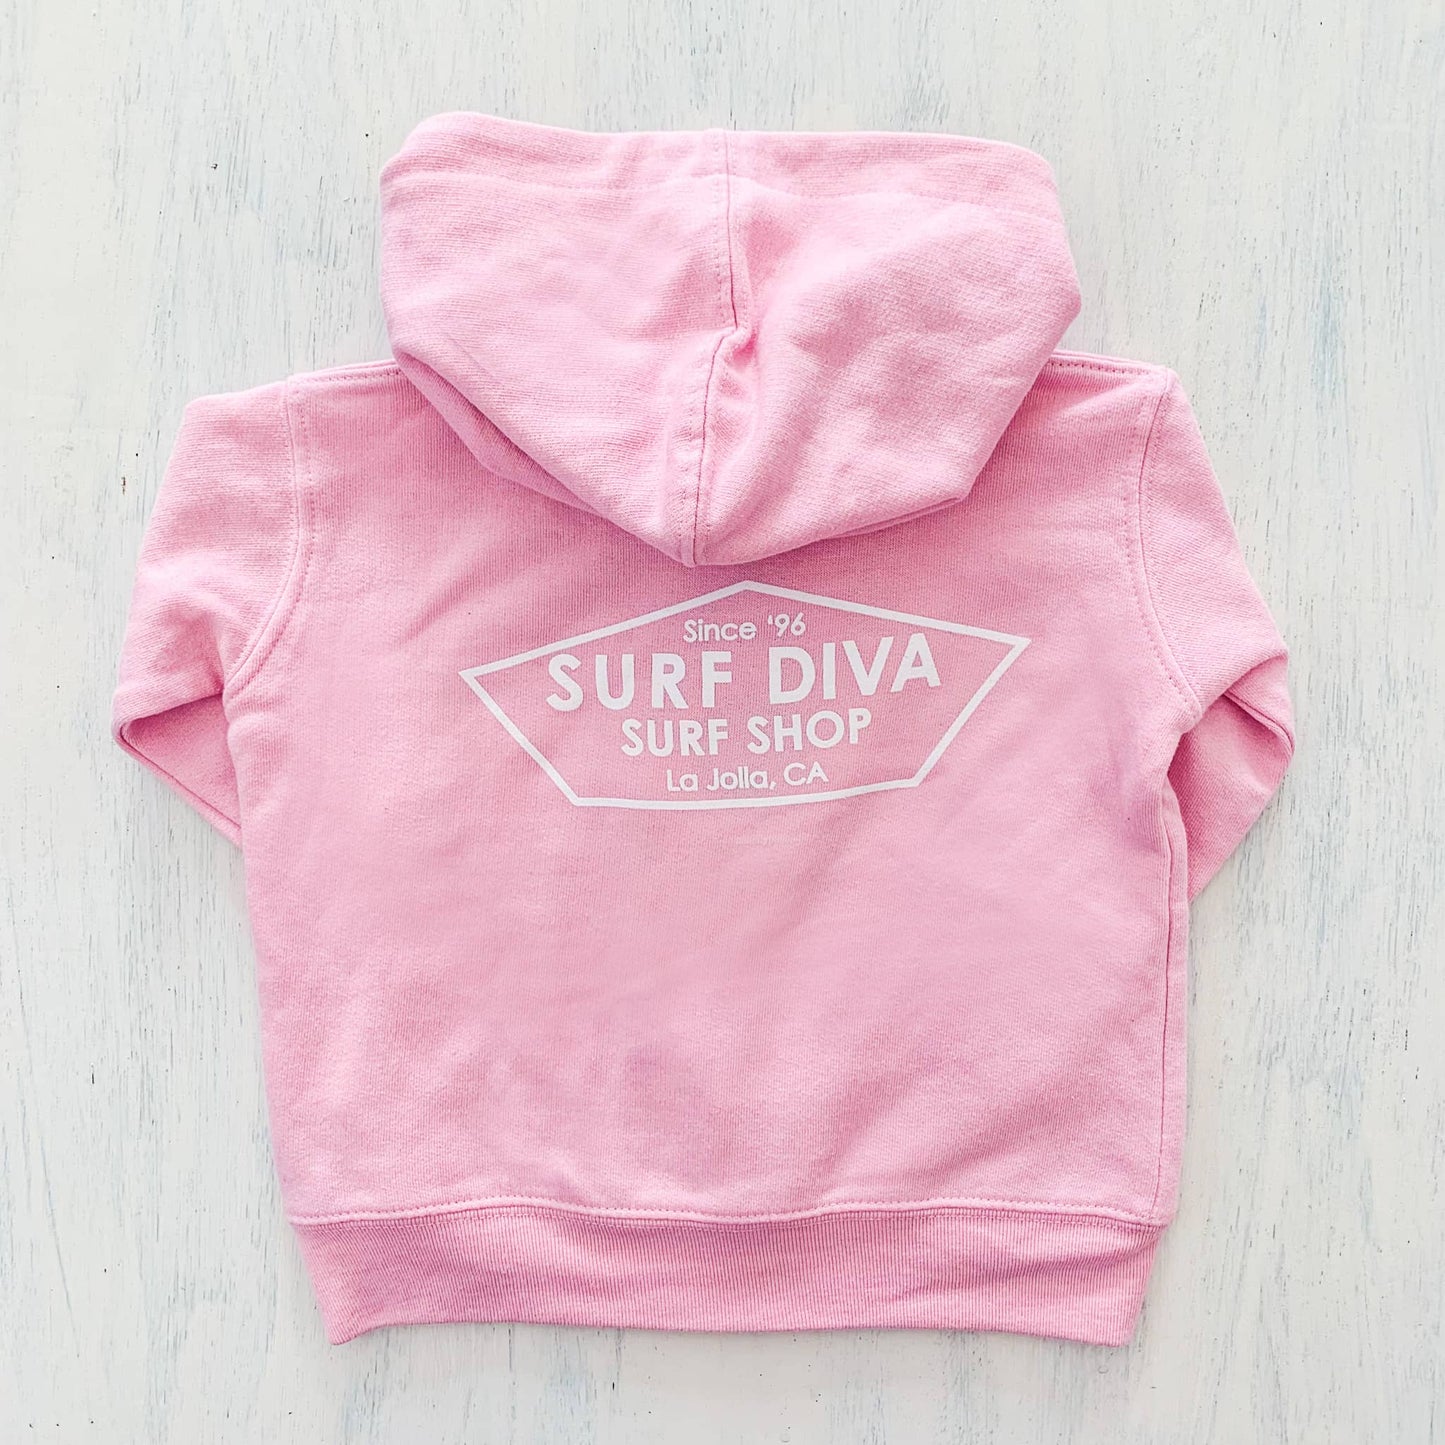 Surf Diva Surf Shop - BABY ZIP HOODIE PINK